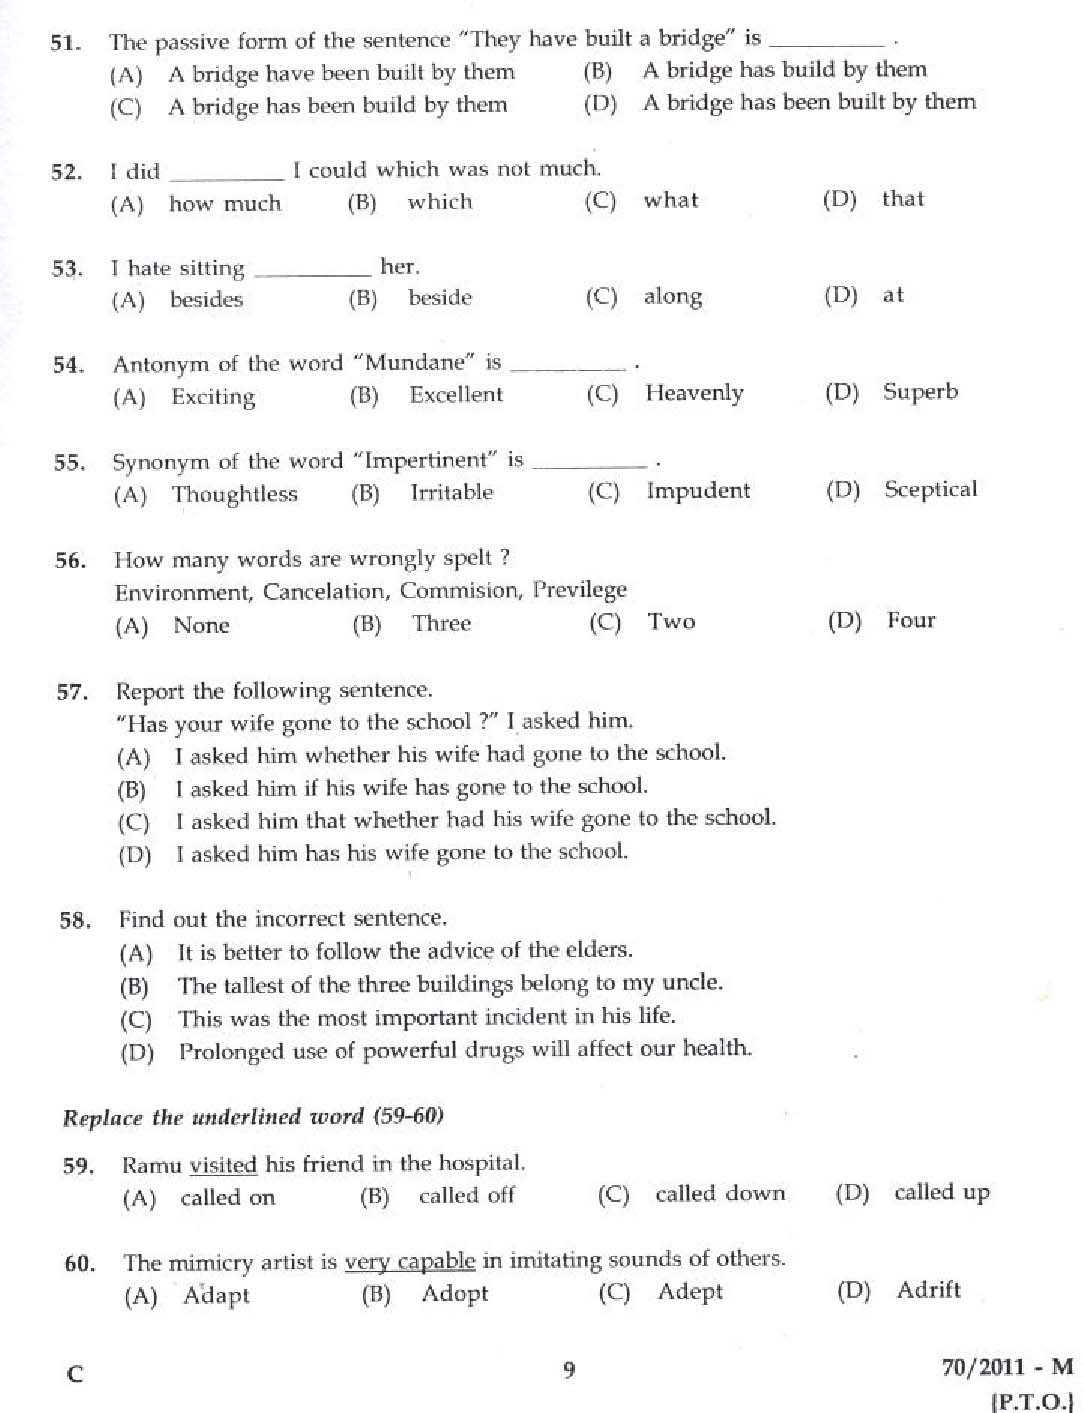 Kerala PSC LD Clerk Palakkad District Exam Question Paper 2011 7